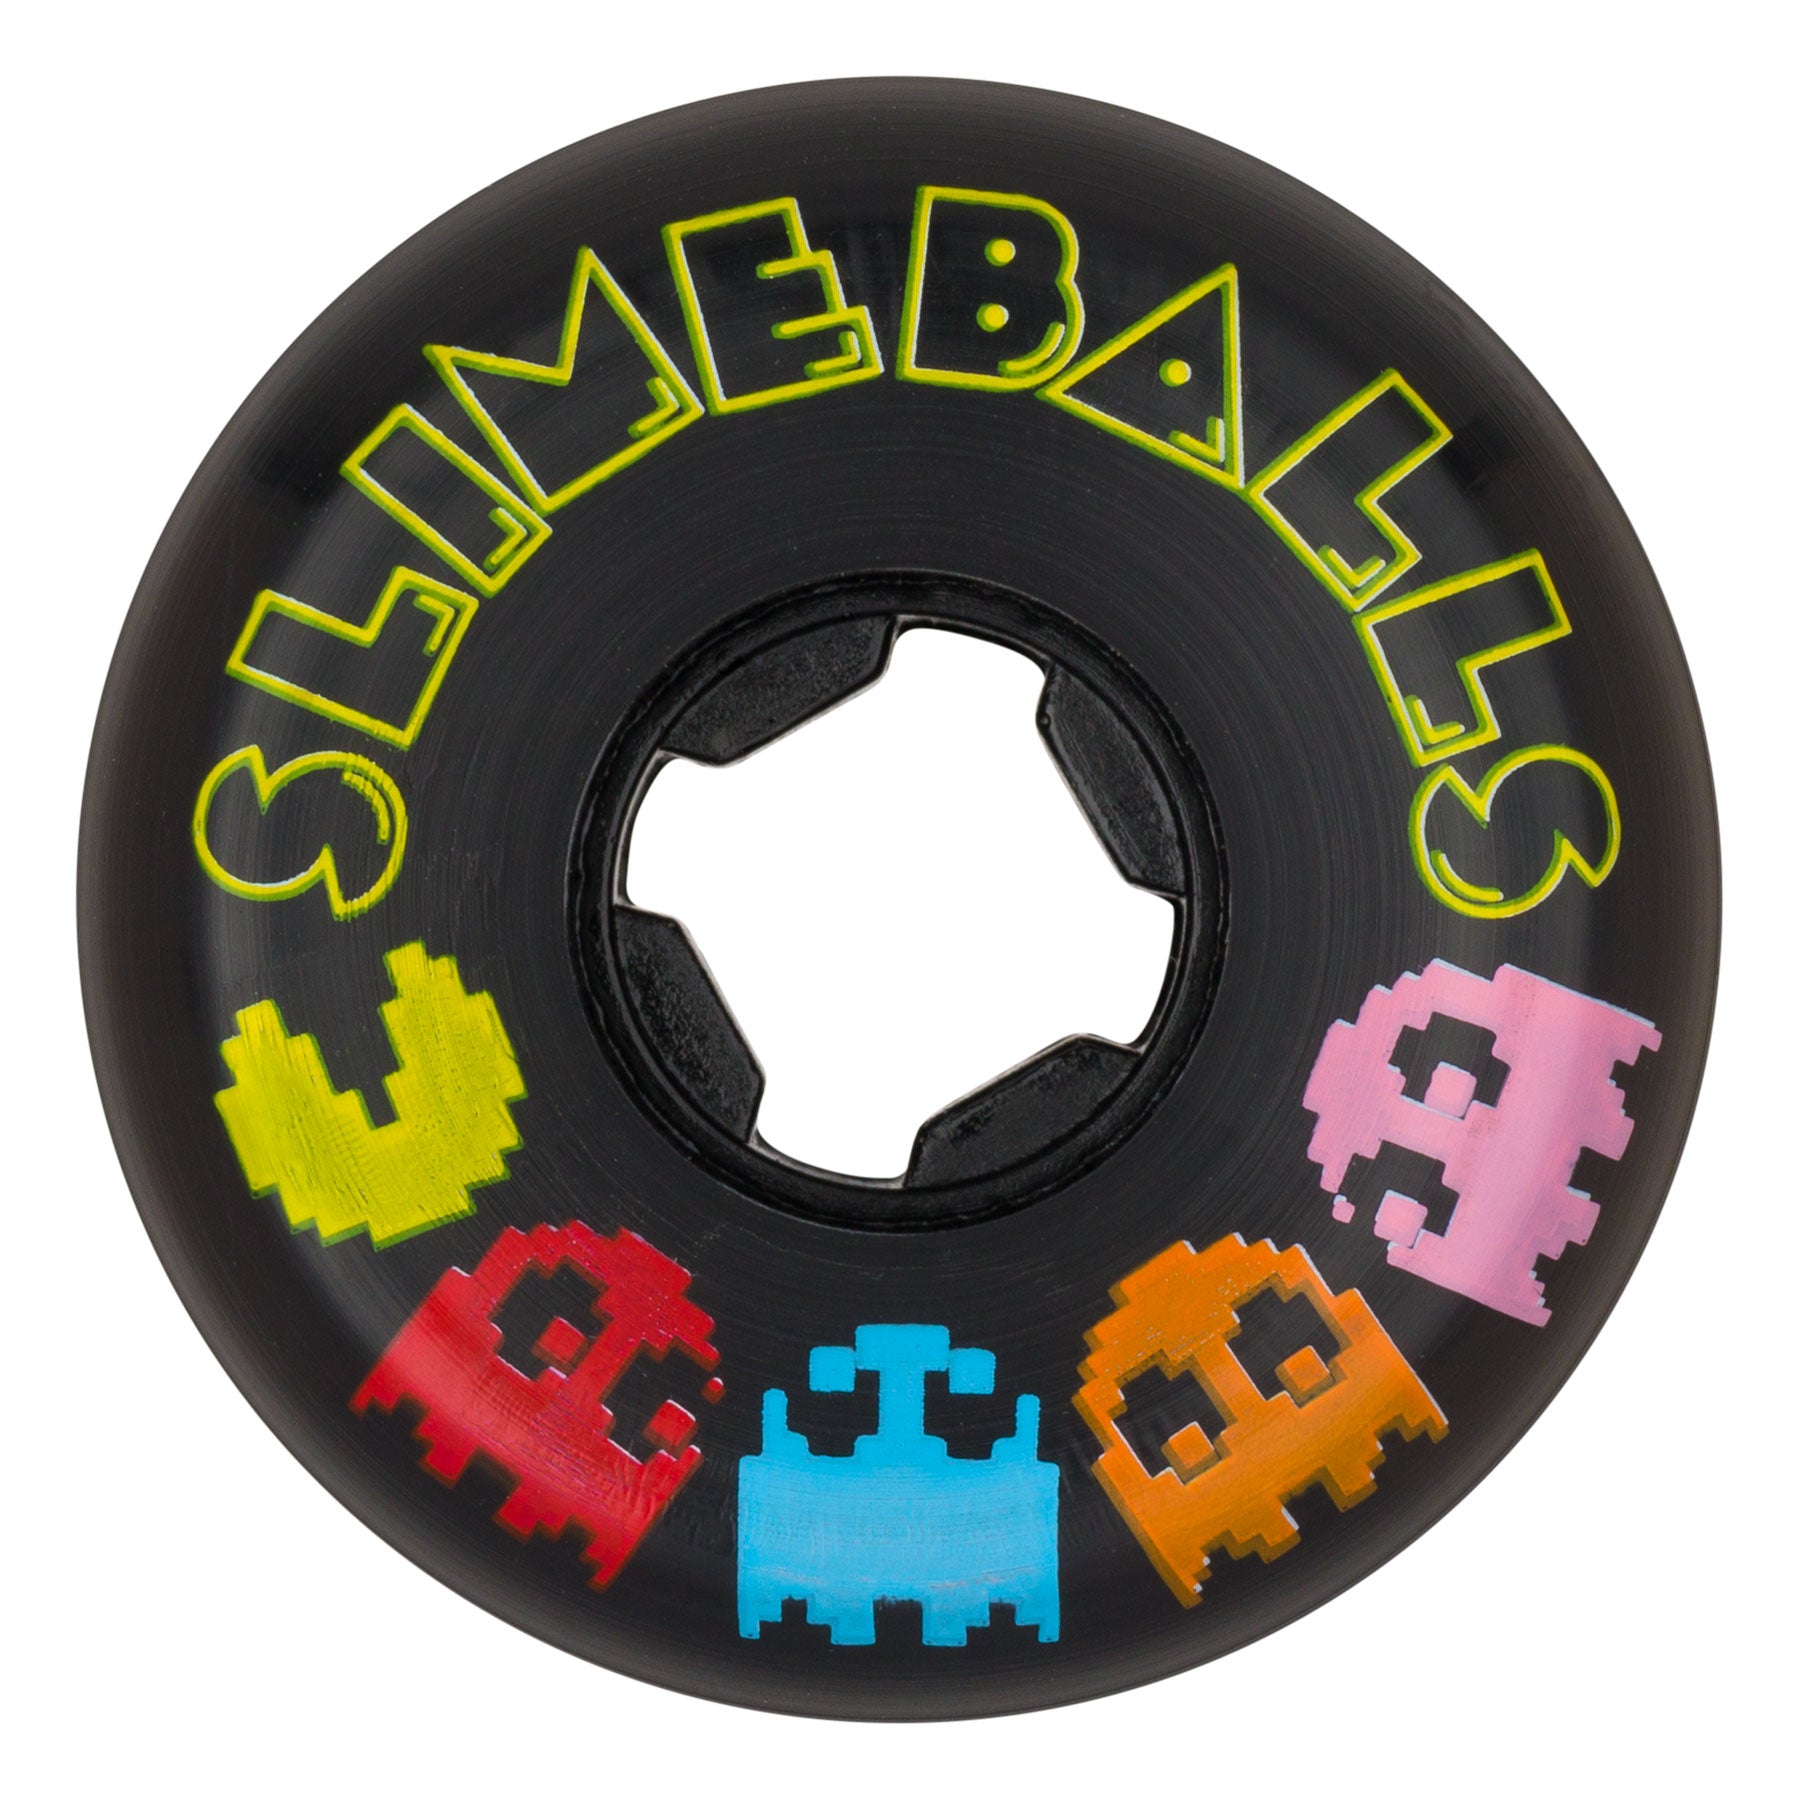 Slime Balls Skateboard Wheels PAC-MAN Vomit Mini Black 97a 54mm - Invisible Board Shop